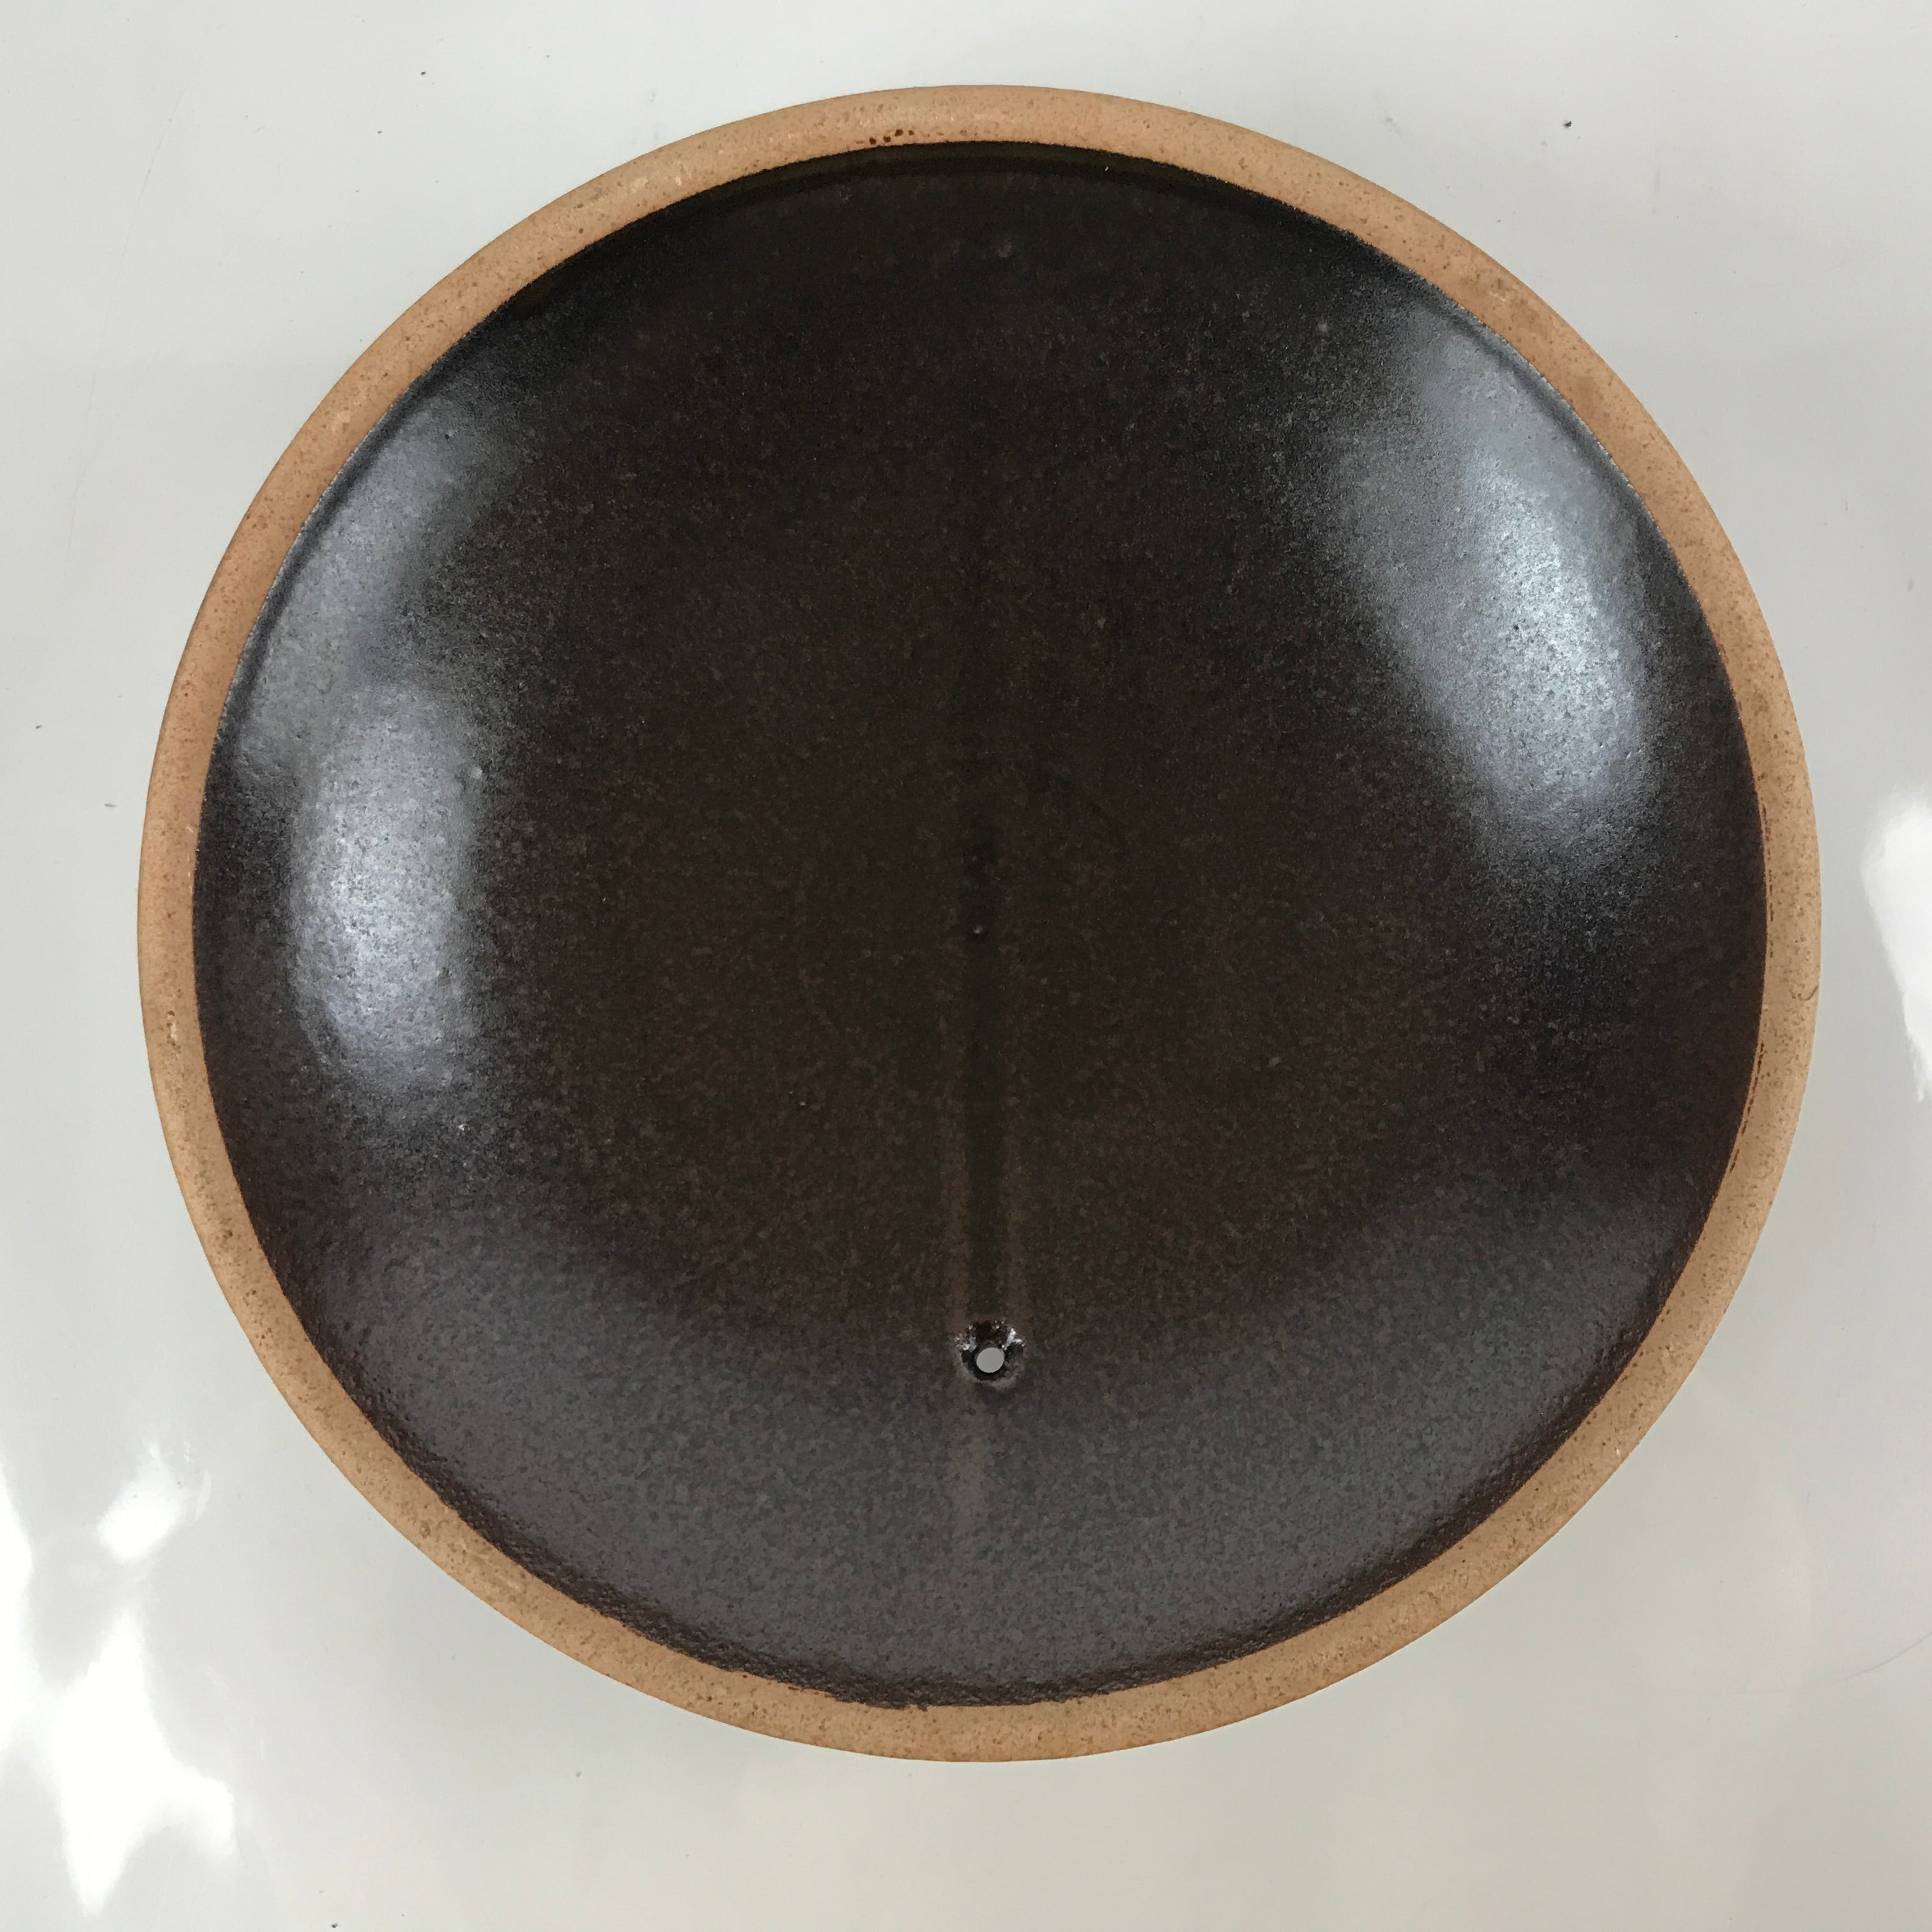 Japanese Ceramic Donabe Nabe Pot Vtg Large Hotpot Pottery Yakimono Brown PY748